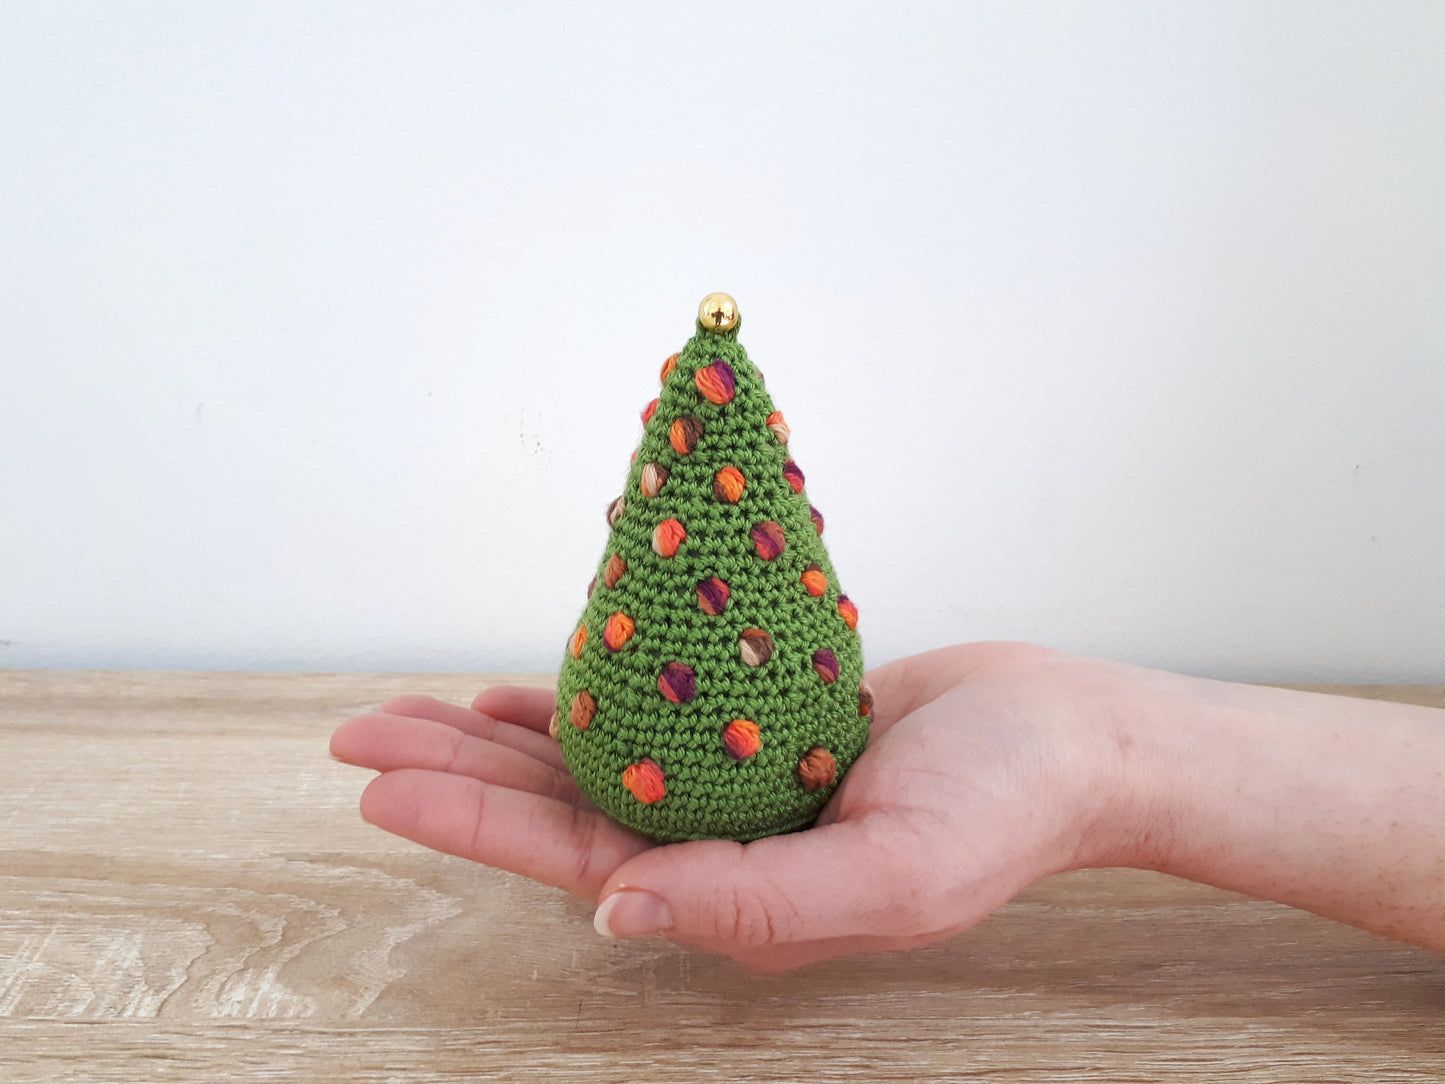 Bobbles Christmas Tree Ornament Crochet Pattern by Agat Rottman